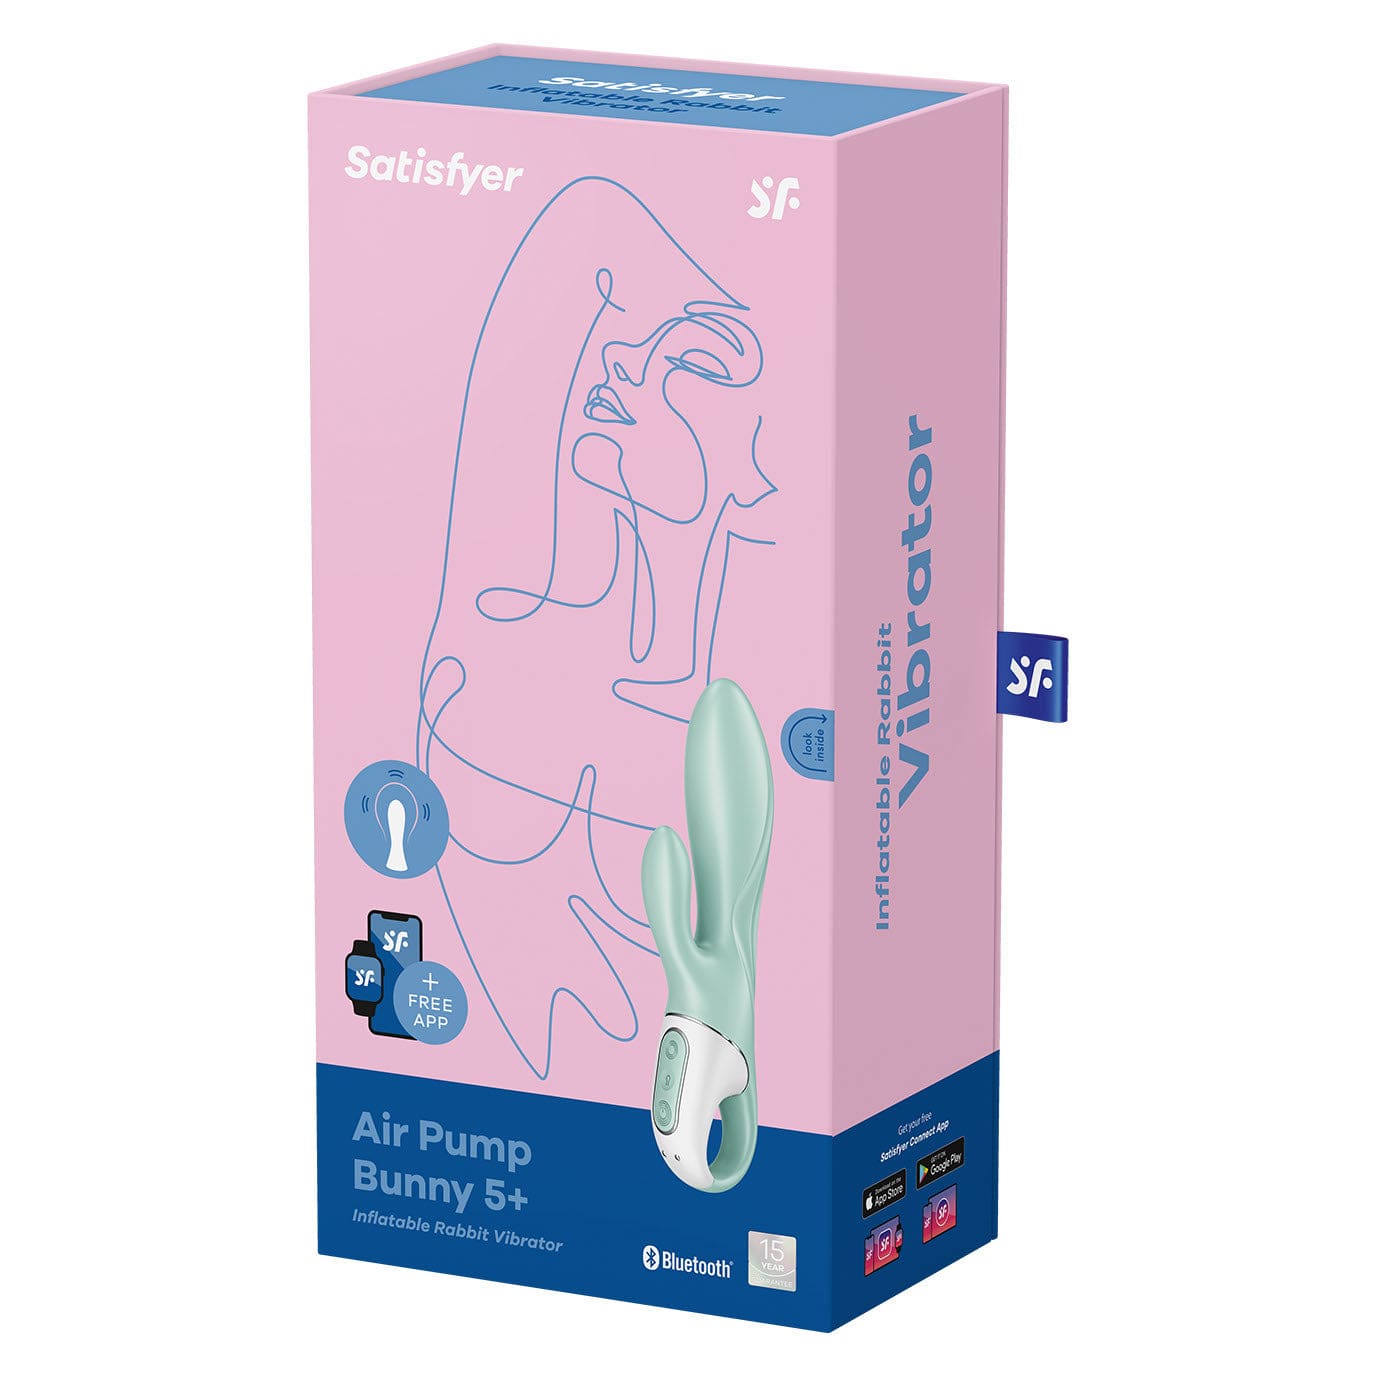 Satisfyer - Air Pump App-Controlled Air Pump Bunny 5 Rabbit Vibrator (Turquoise) -  Rabbit Dildo (Vibration) Rechargeable  Durio.sg